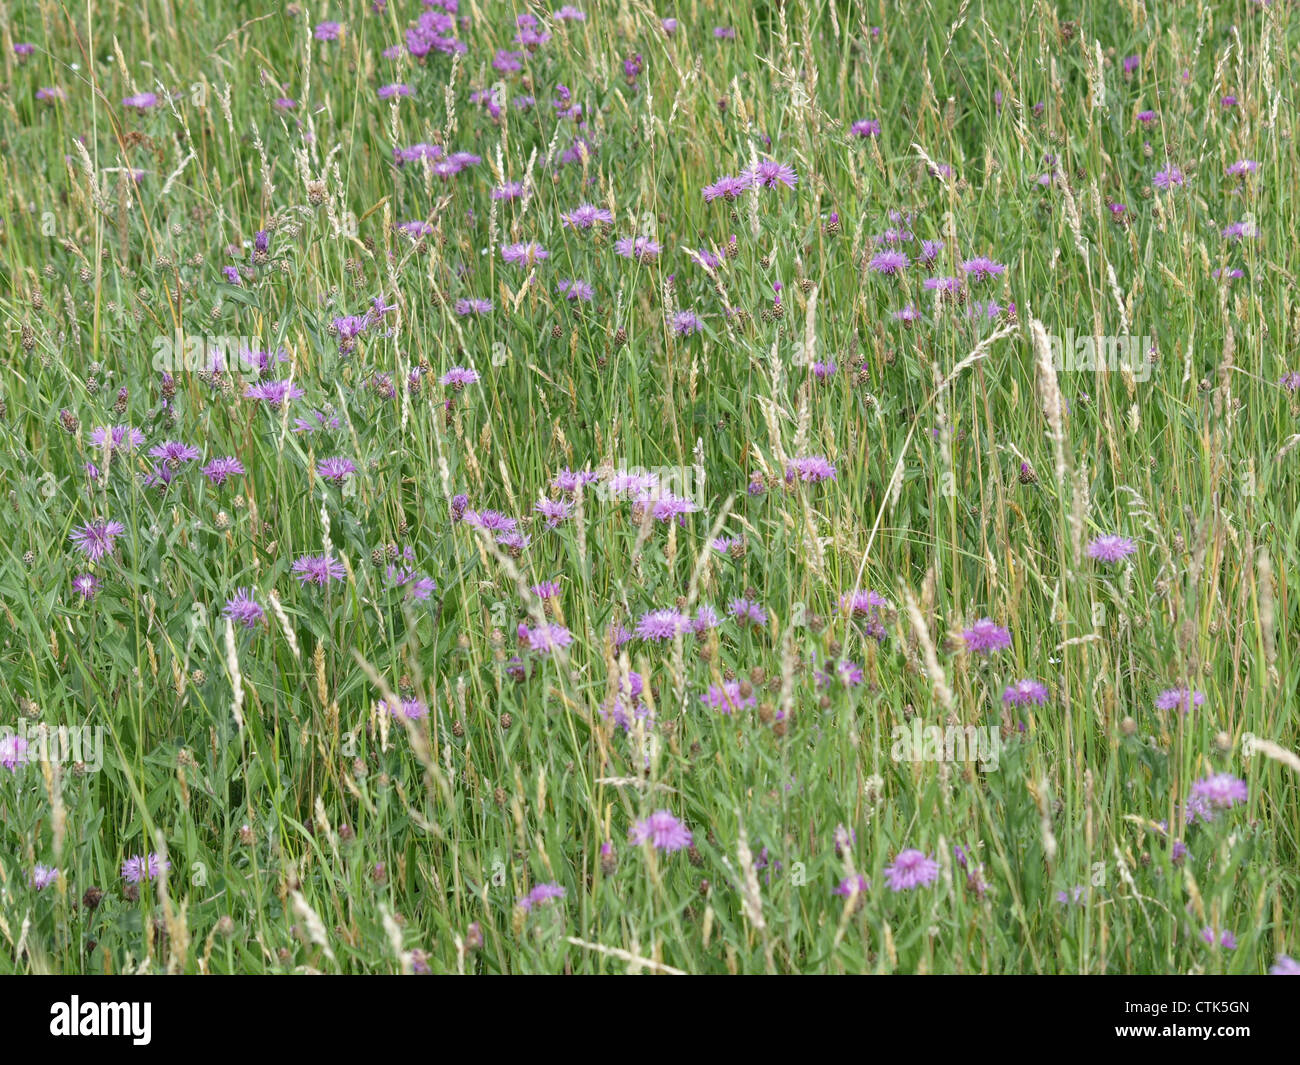 Brown knapweed / Centaurea jacea / Wiesen-Flockenblume Stock Photo